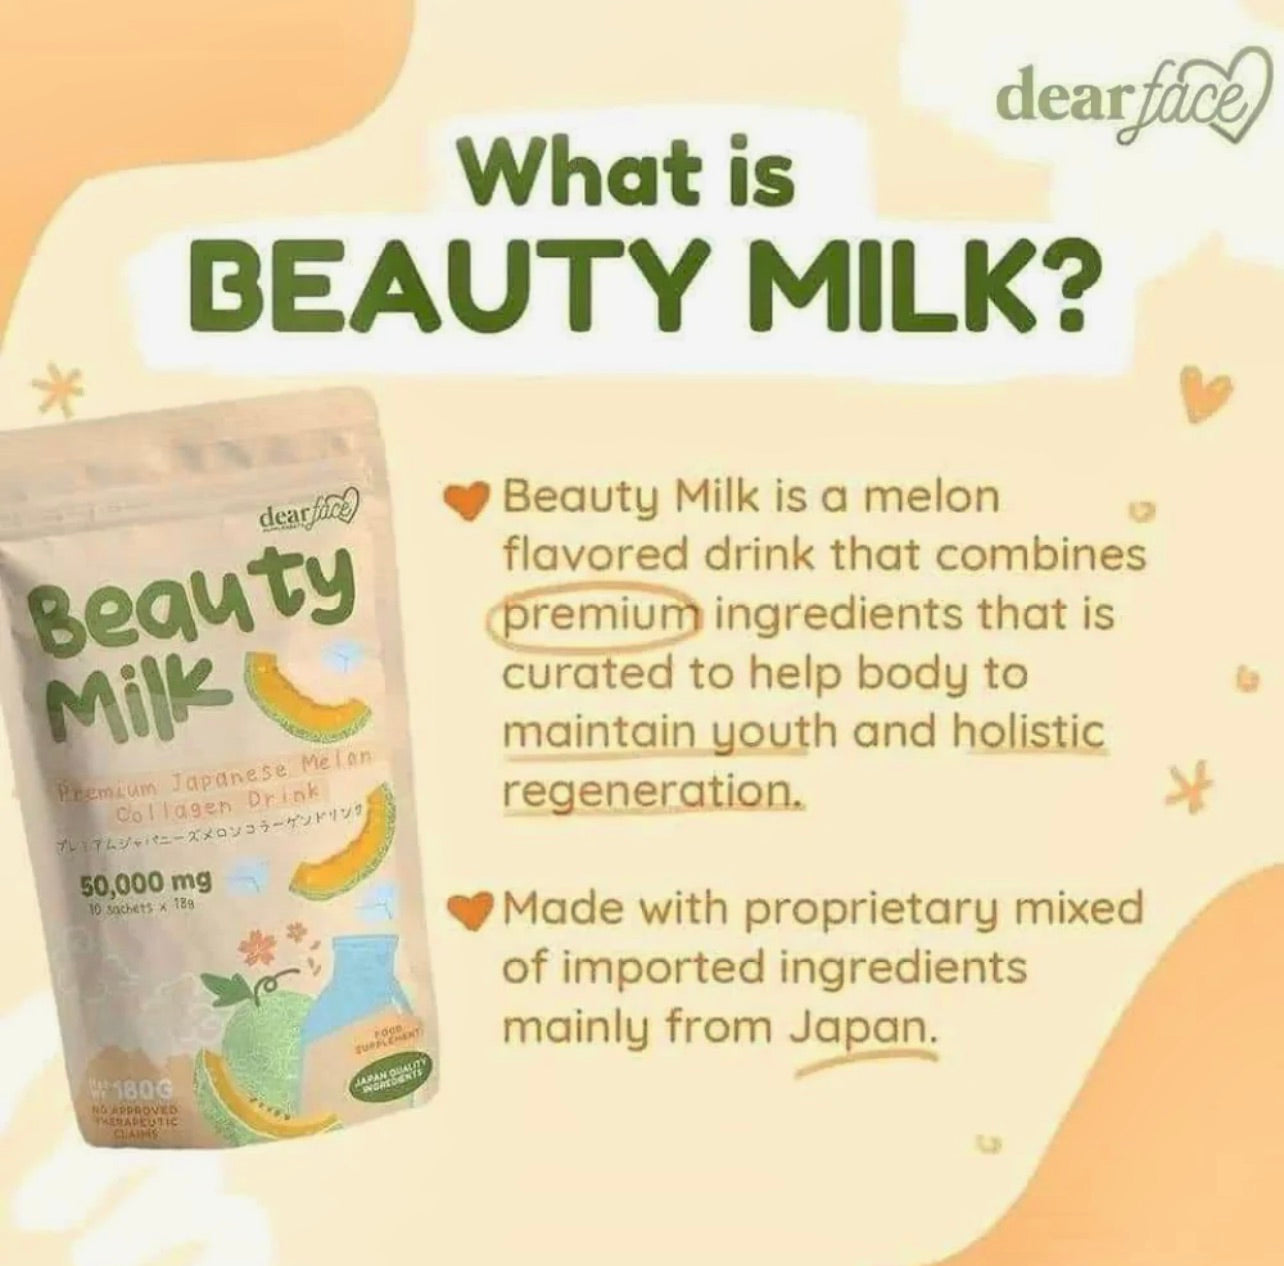 Dear Face Beauty Milk Premium Japanese Melon Drink